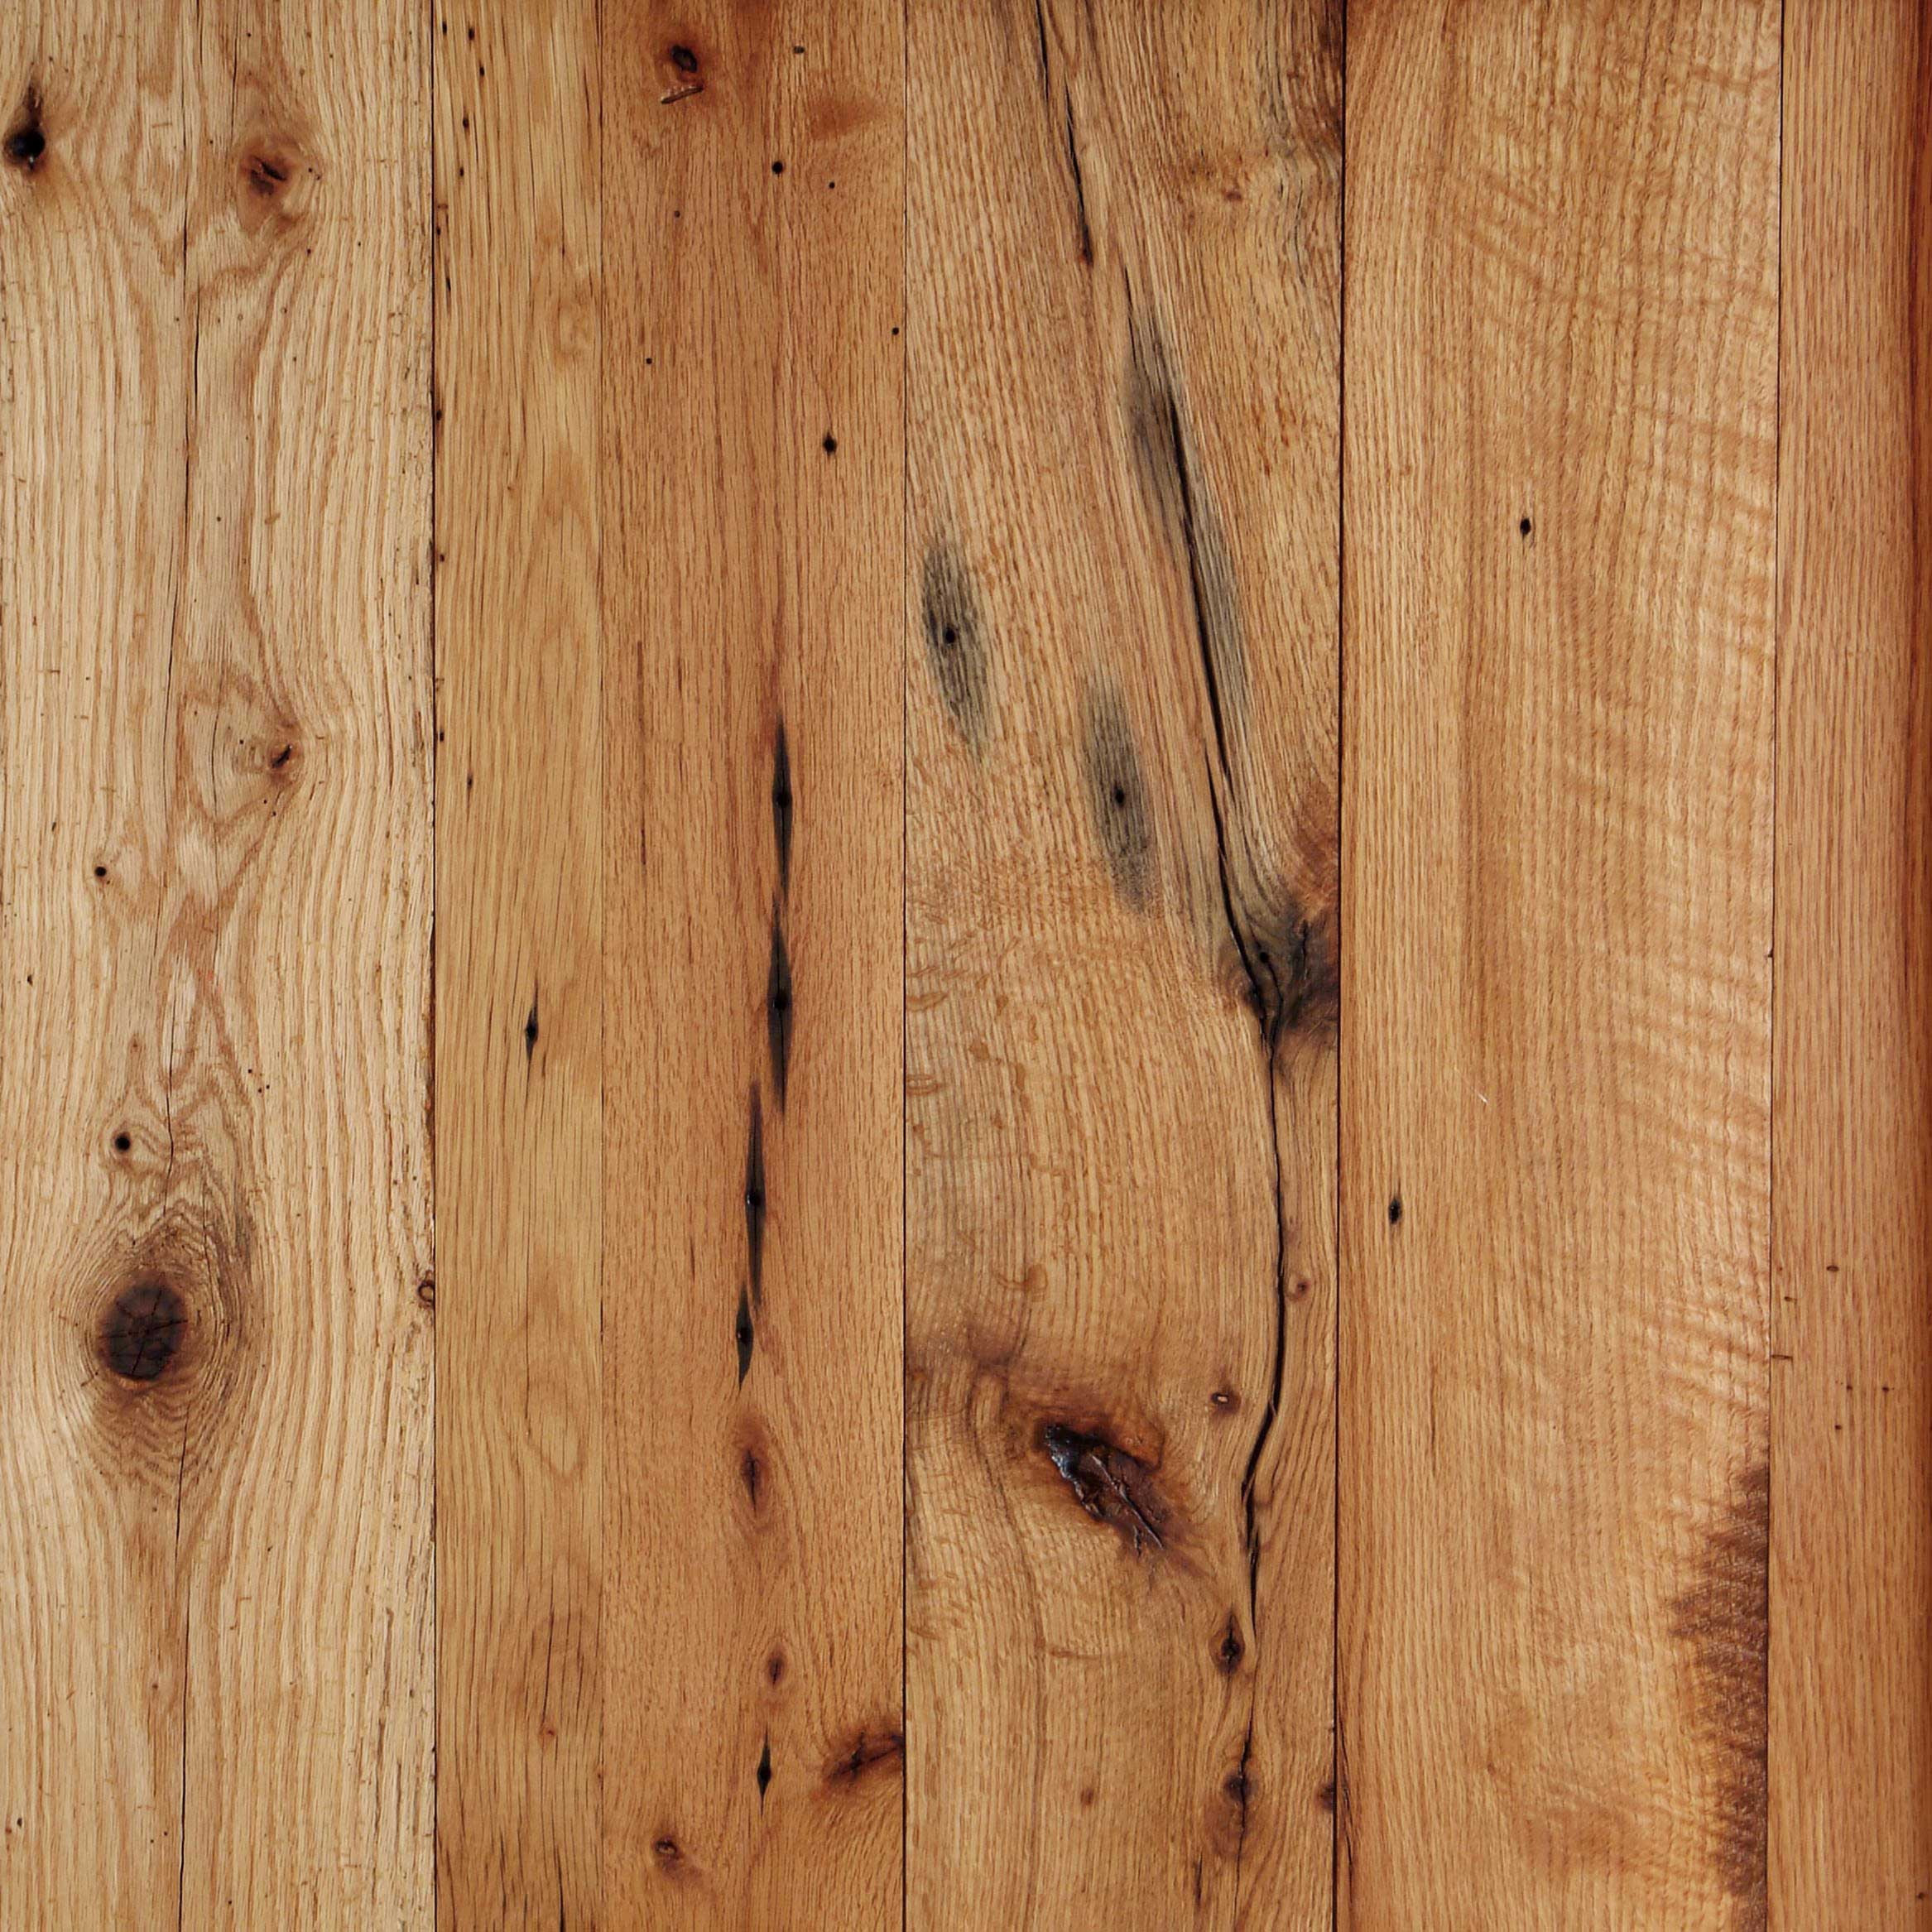 25 Stunning Modern Hardwood Flooring Ideas 2024 free download modern hardwood flooring ideas of longleaf lumber reclaimed red white oak wood regarding reclaimed salvaged antique red oak flooring wide boards knots